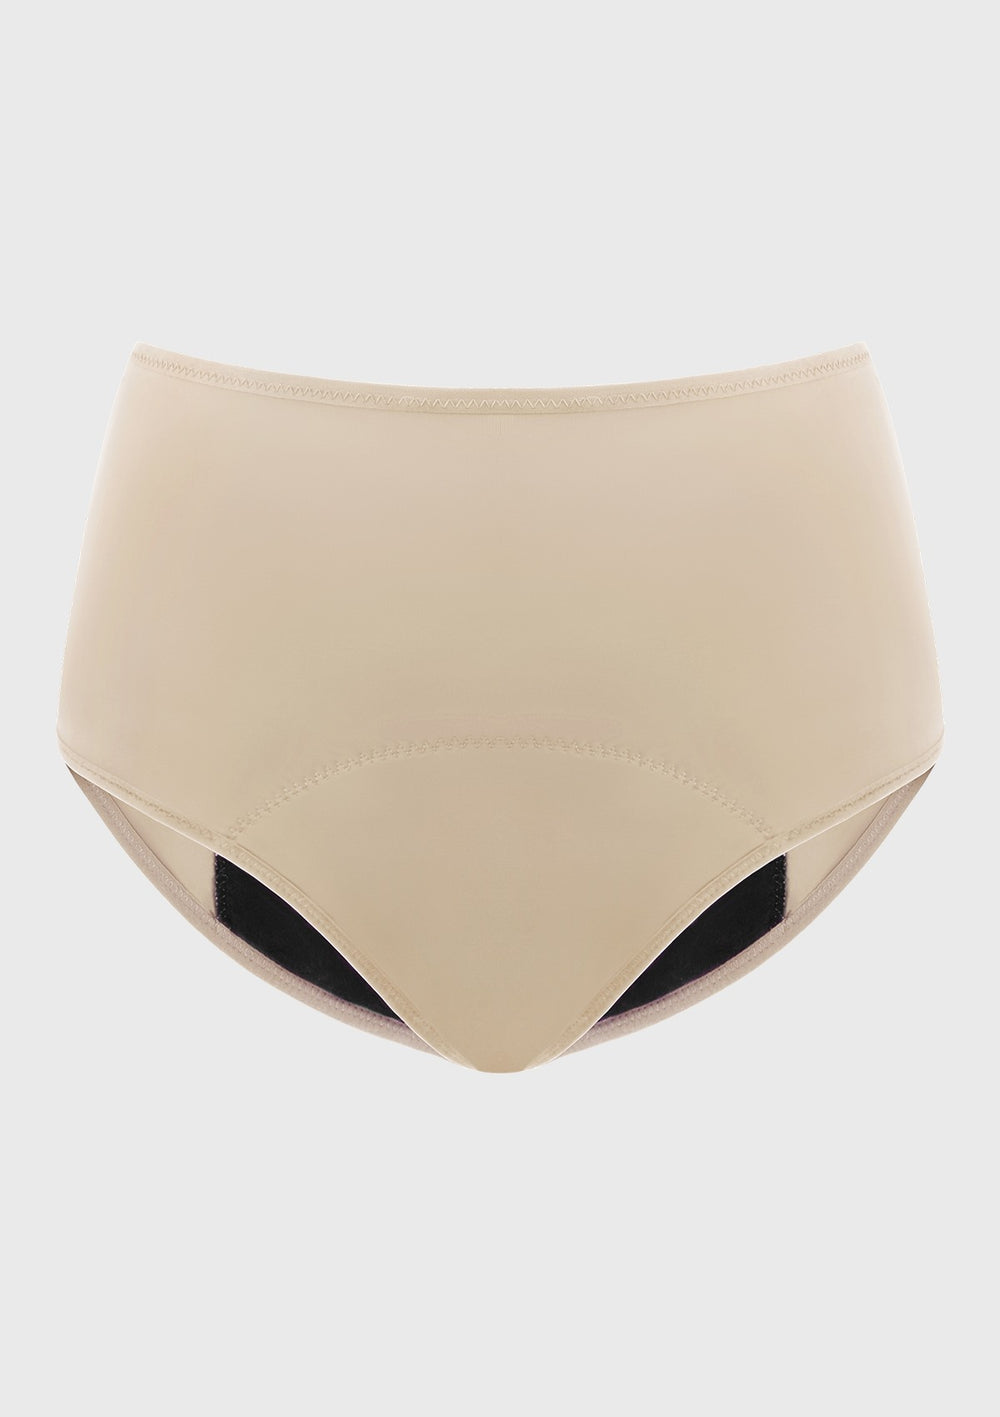 Patricia Smooth Classic Soft Stretch Beige High-rise Brief Underwear